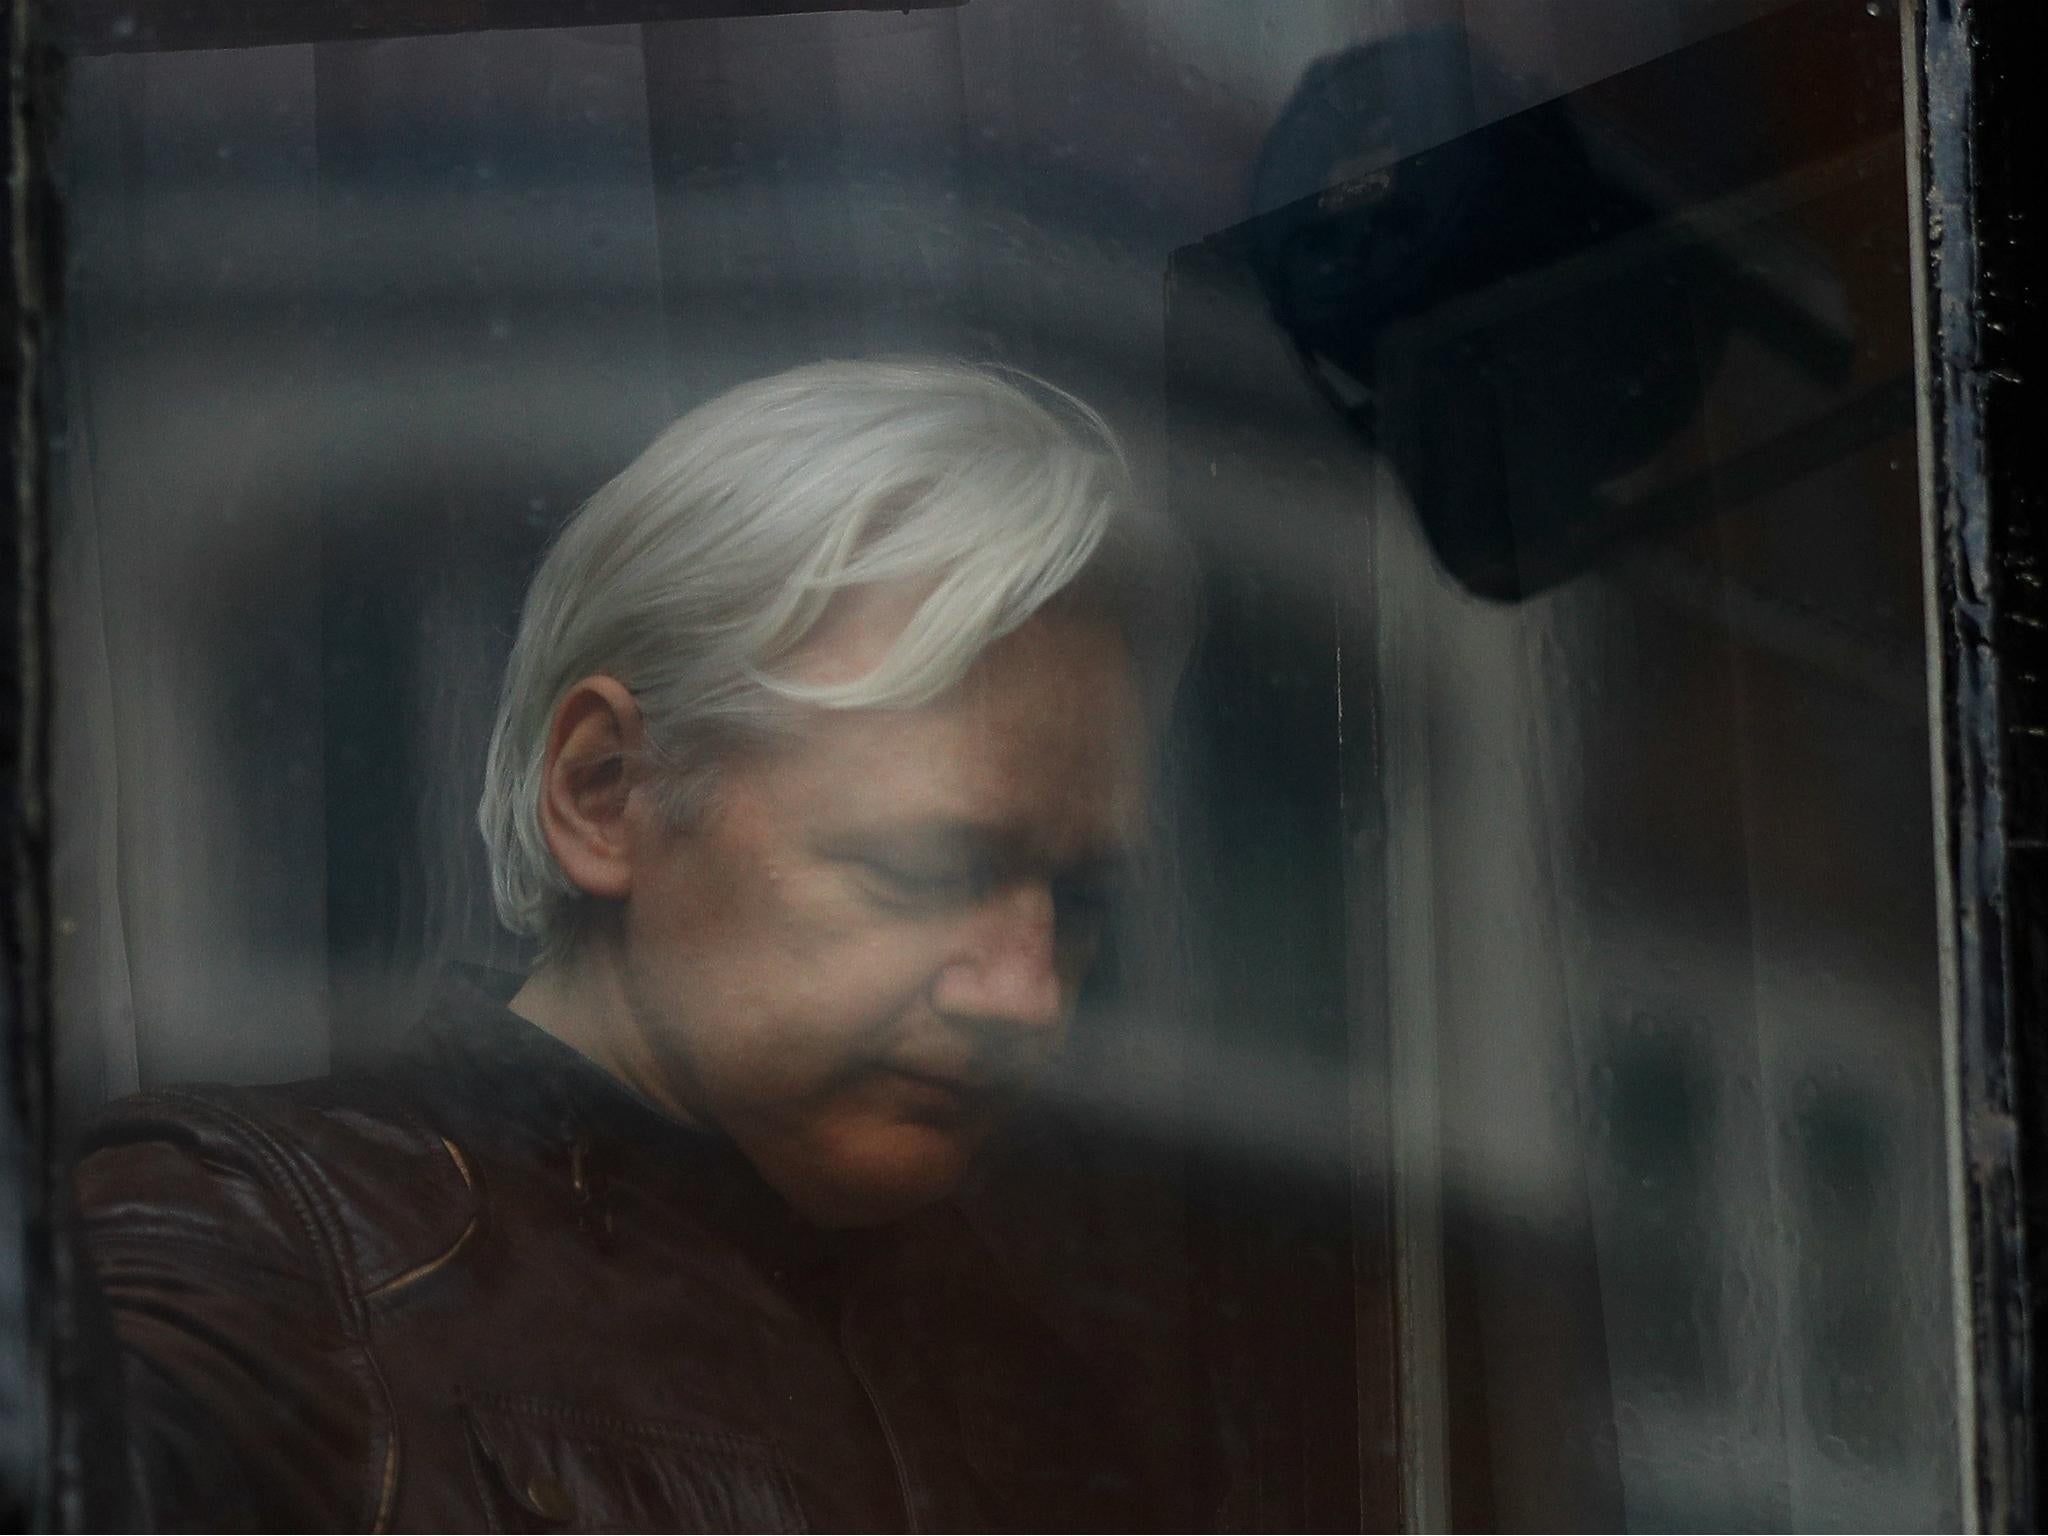 WikiLeaks founder Julian Assange is seen on the balcony of the Ecuadorian Embassy in London, Britain, May 19, 2017